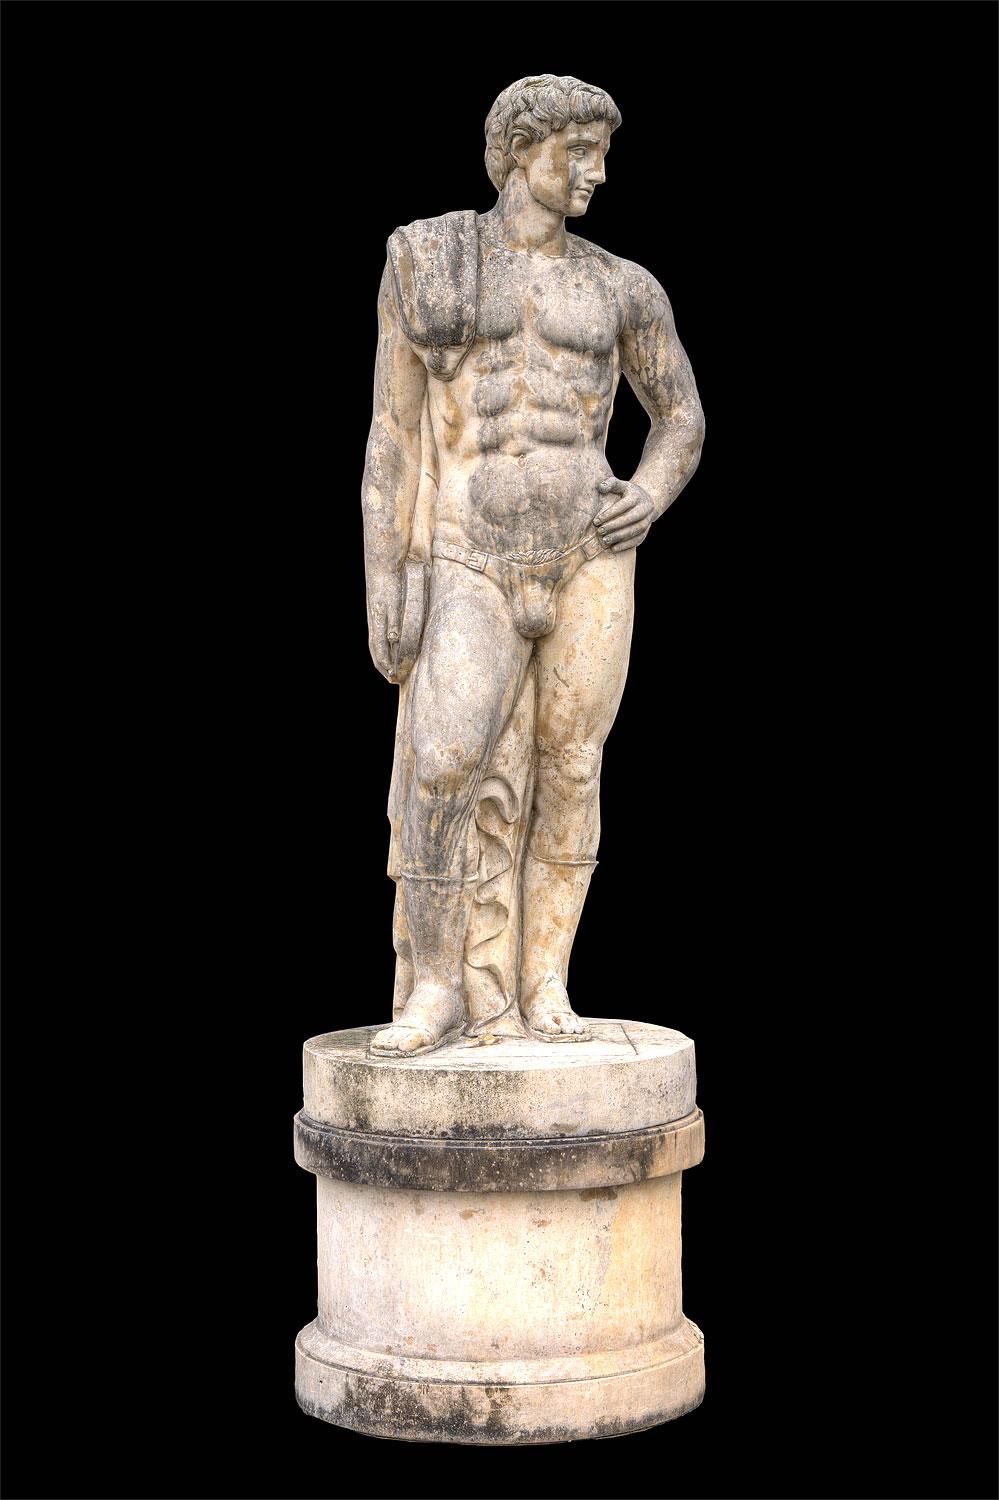  Figuratif figuratif italien en marbre monumental de style rationaliste  Sculptures de nus en vente 14